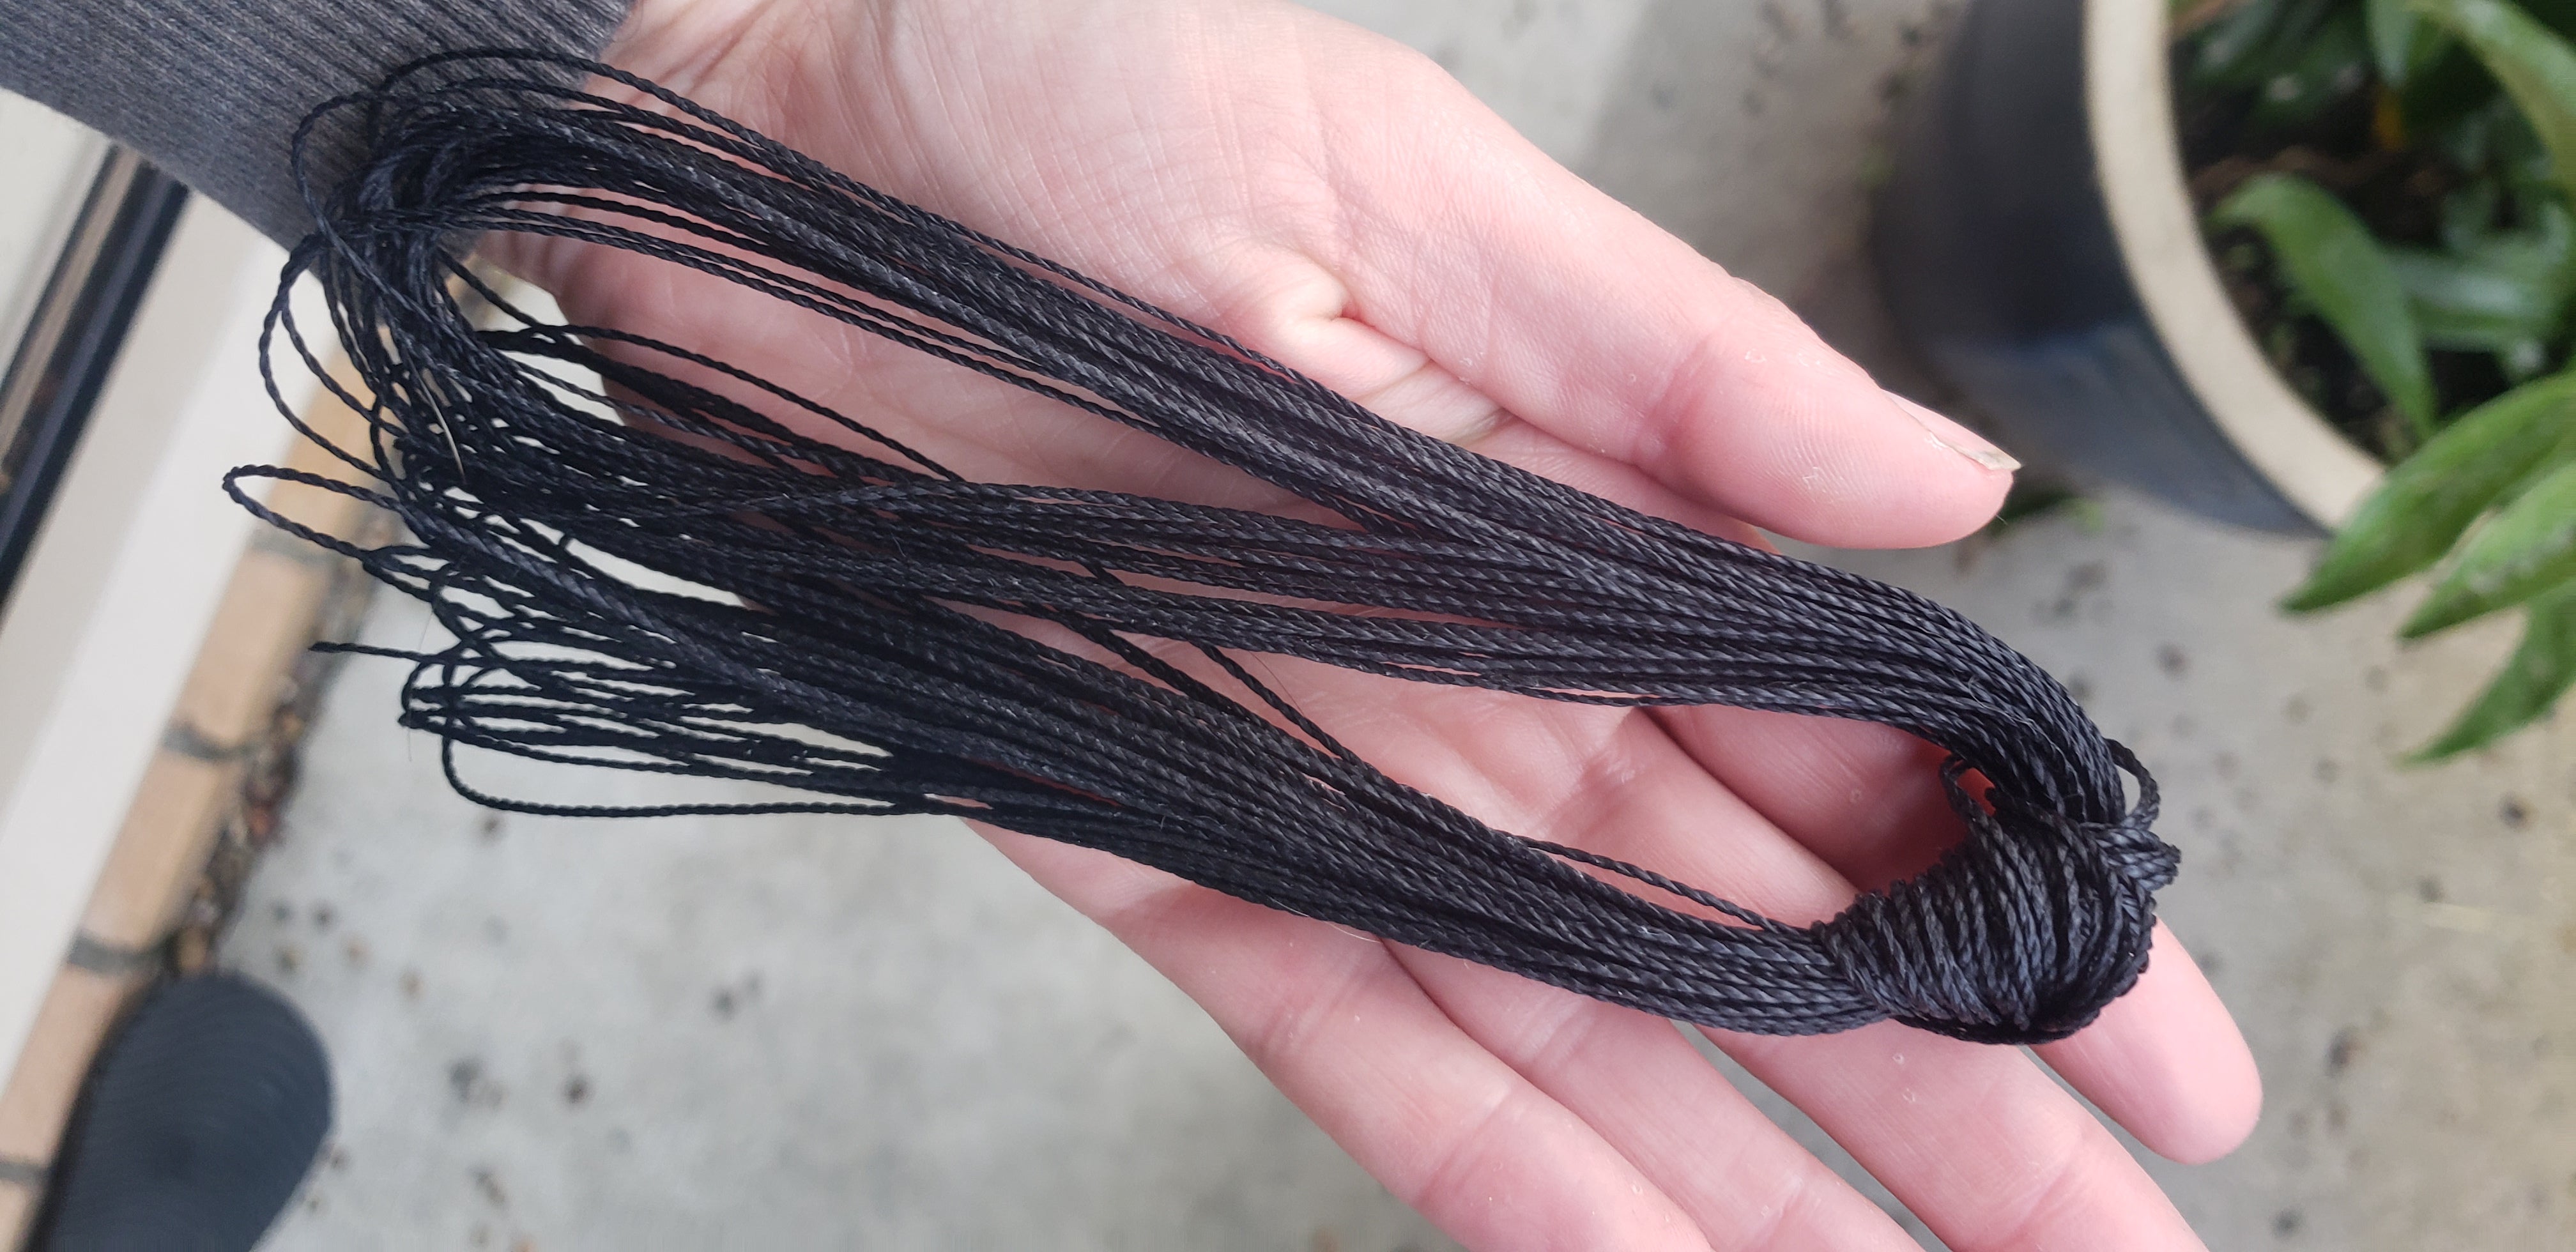 Linhasita Macramè cord - Black - 1mm, 16 meters